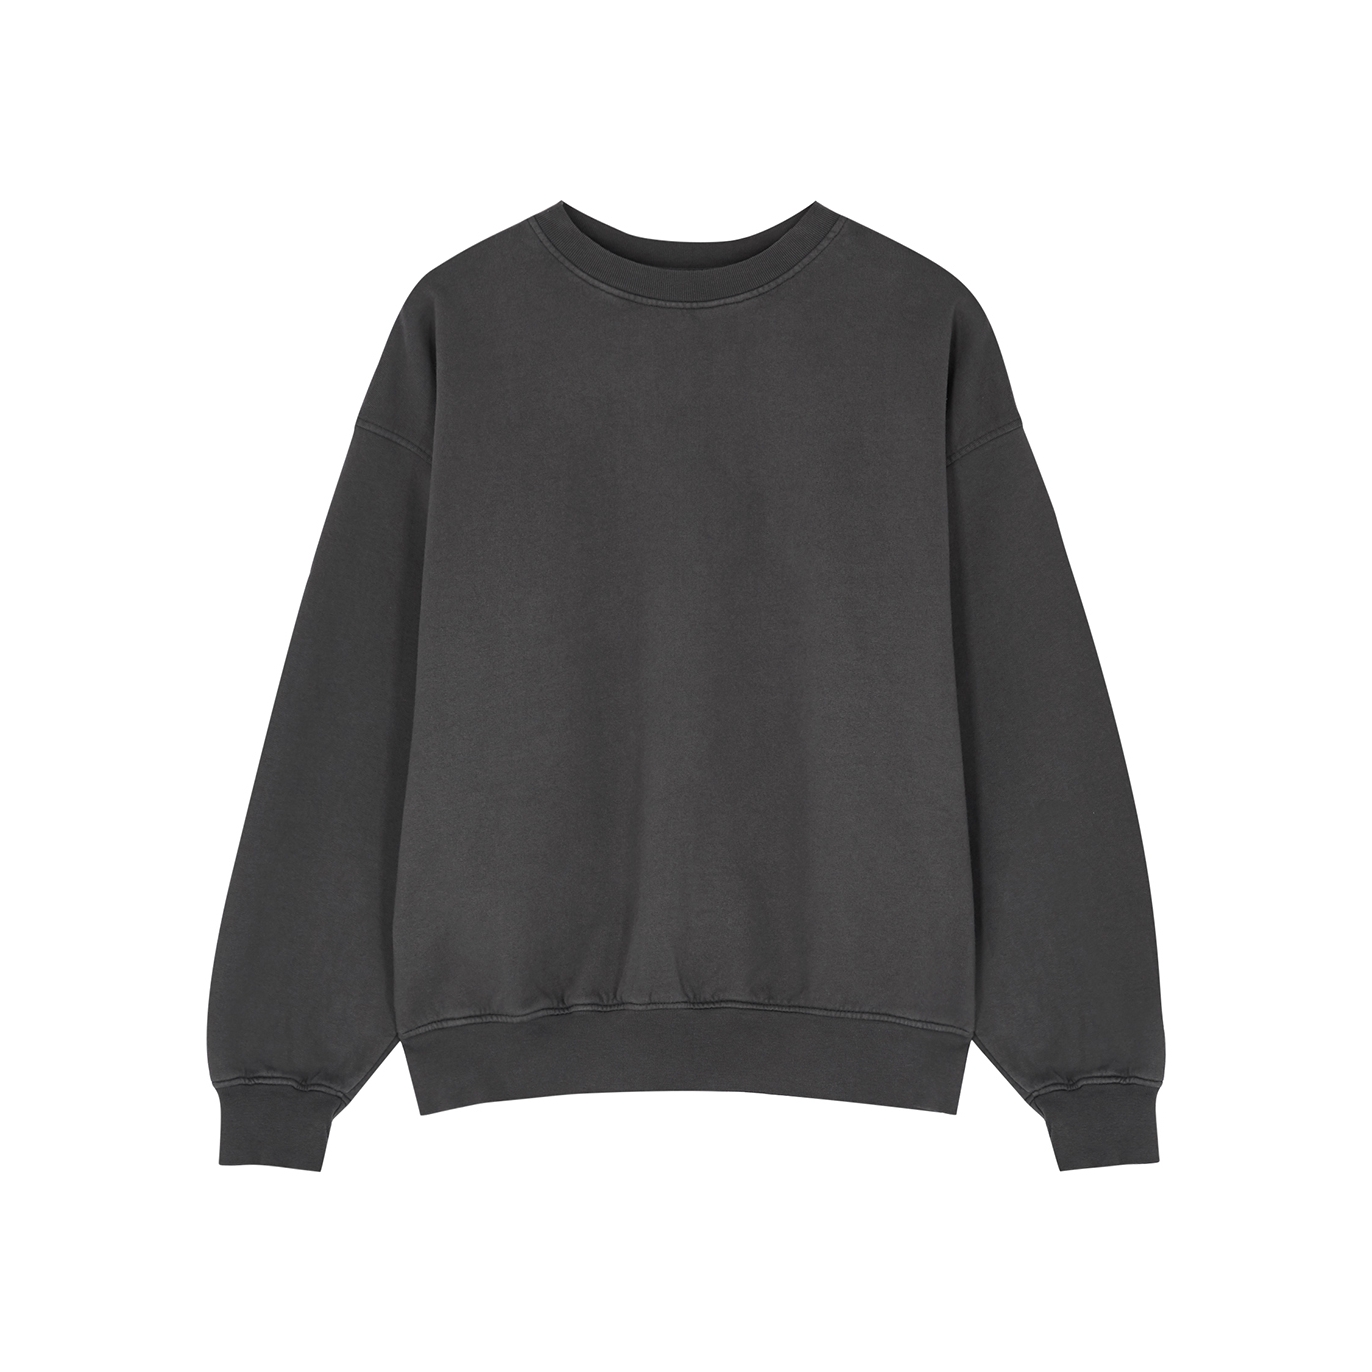 Colorful Standard Charcoal Cotton Sweatshirt